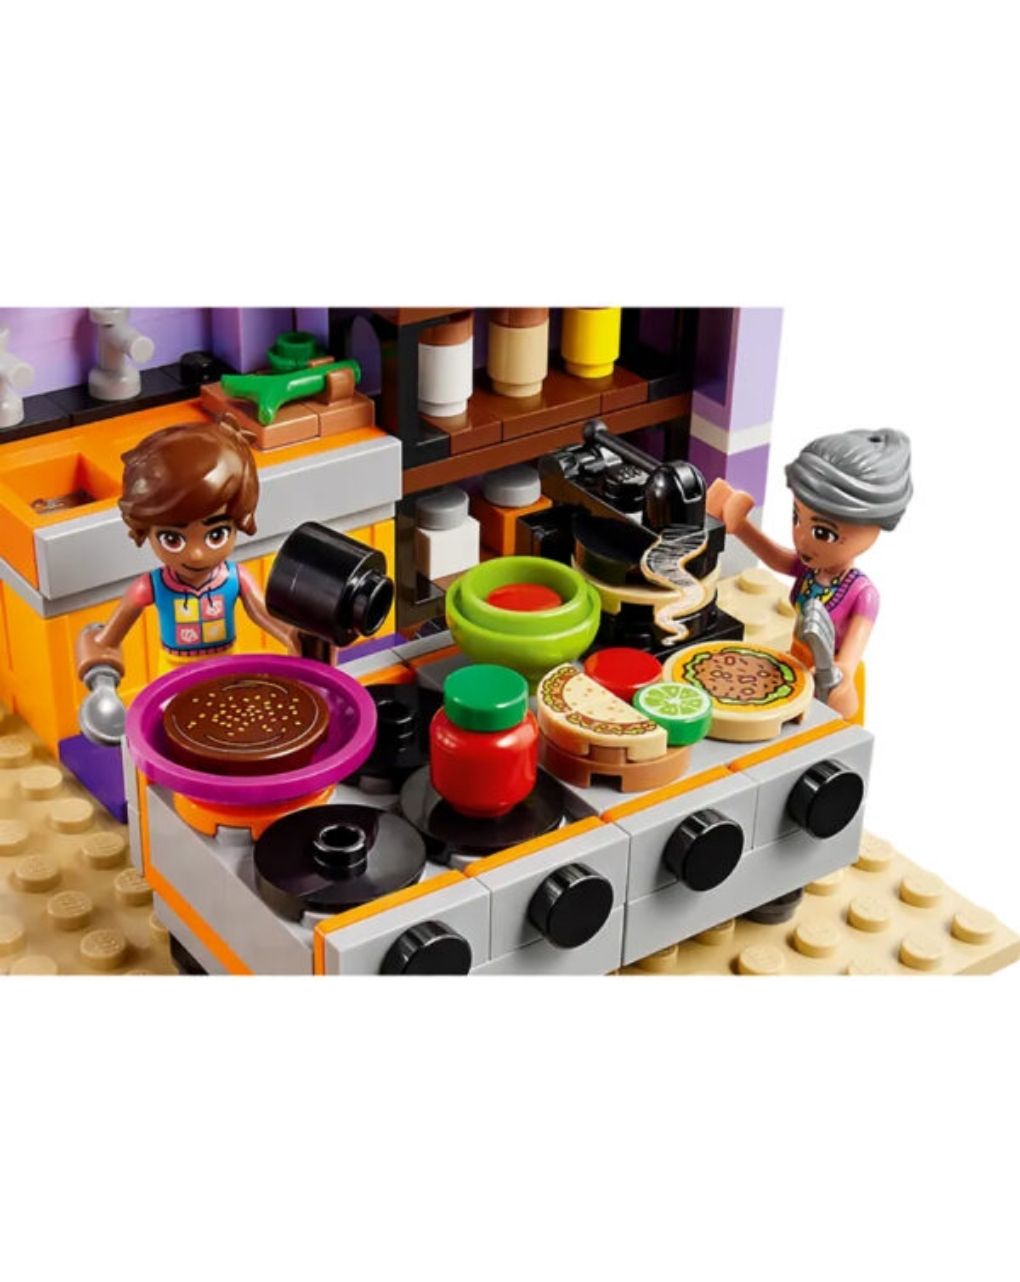 Lego friends heartlike city community kitchen 41747 - Lego